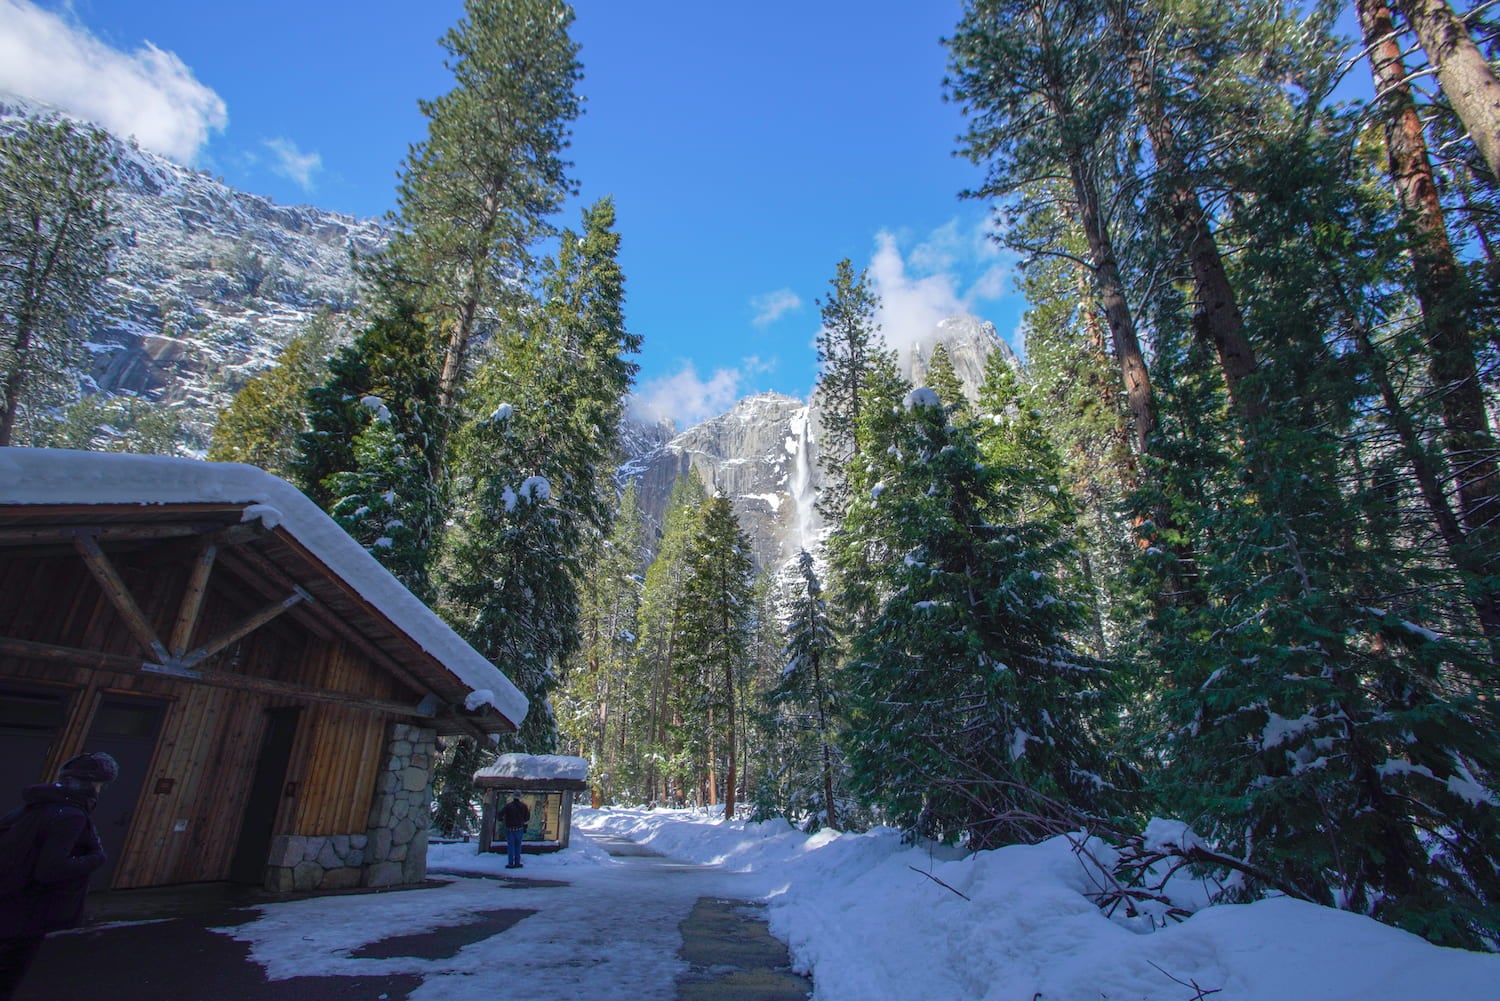 Yosemite National Park snow camping